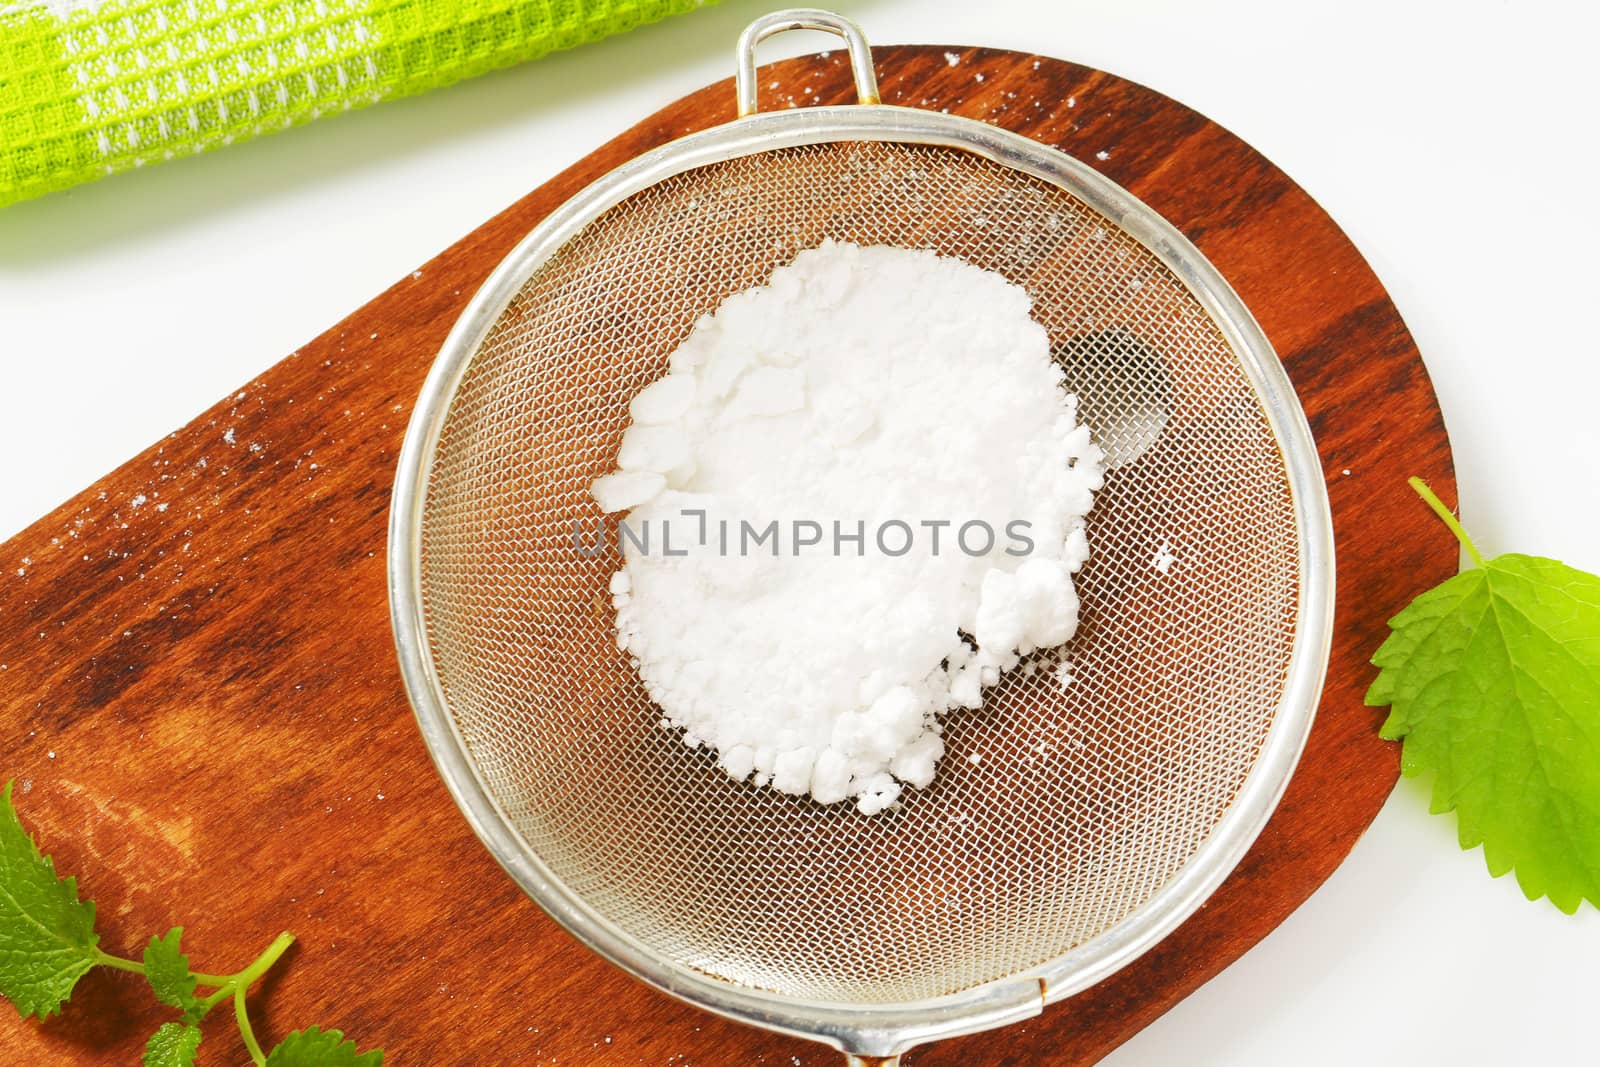 Powdered sugar in a metal sieve